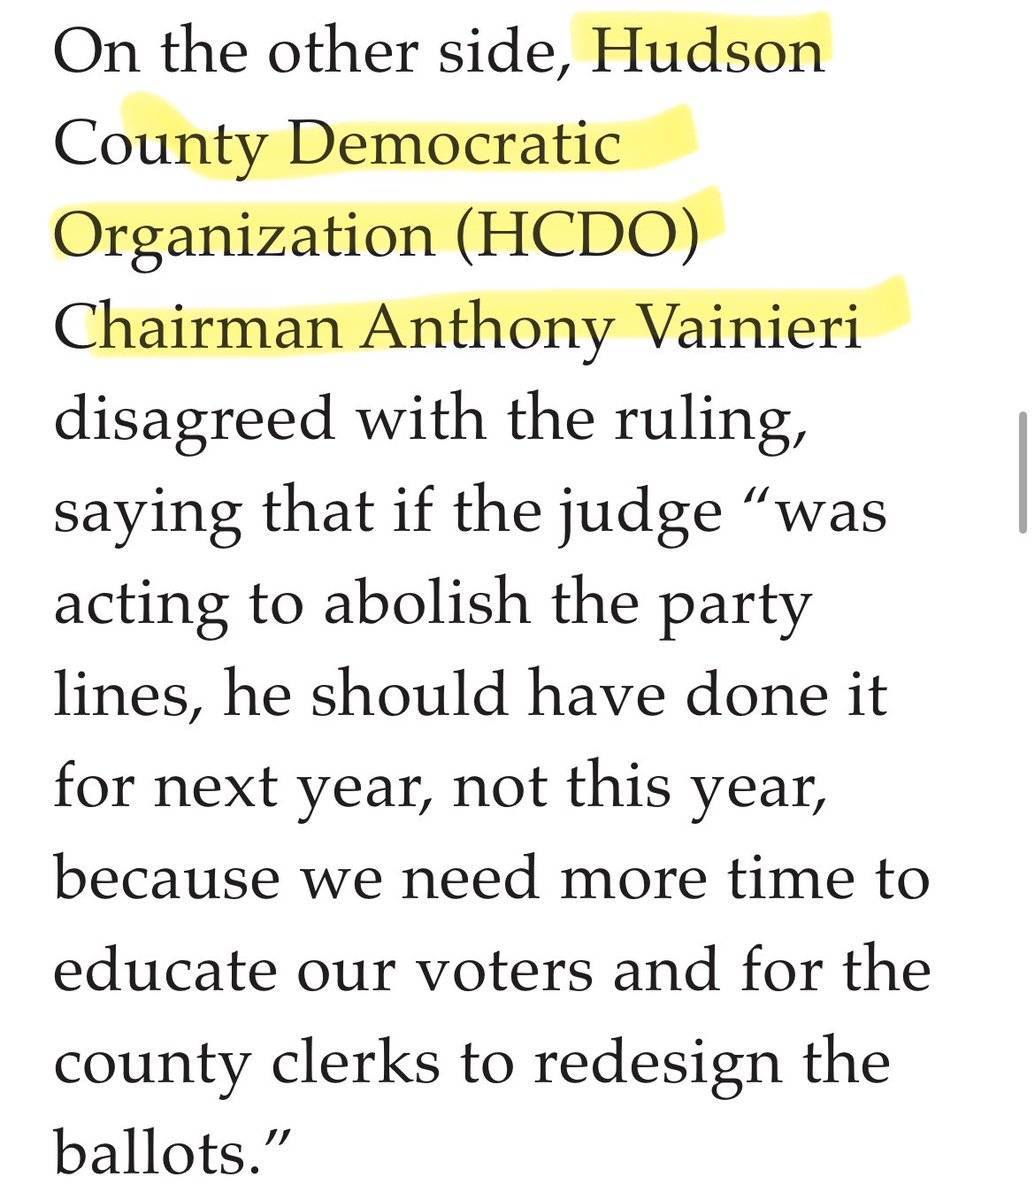 Of course Vainieri (HCDO) and Arango (NJ GOP) are on the same side. #NotRealDemocrats #AbolishTheLine nj.com/hudson/2024/03…